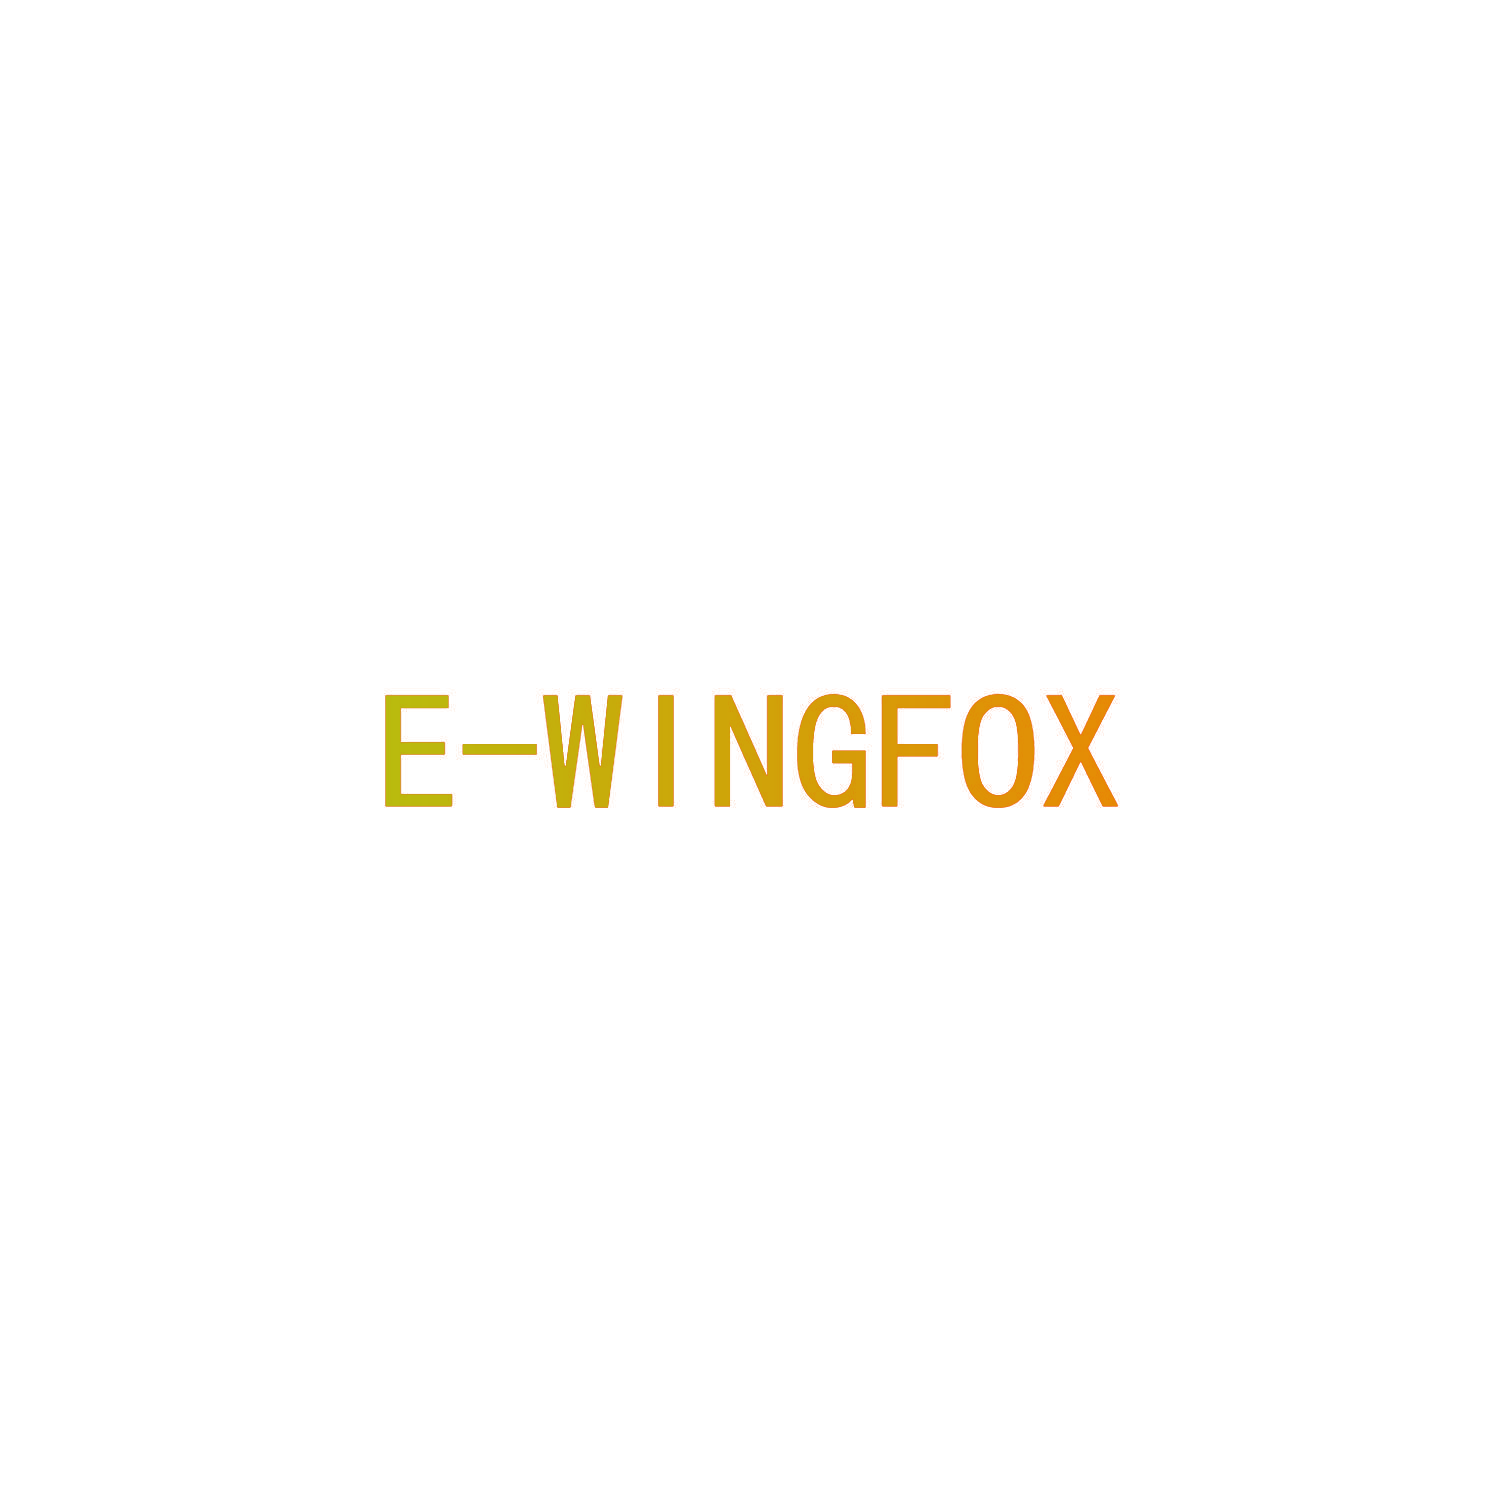 E-WINGFOX